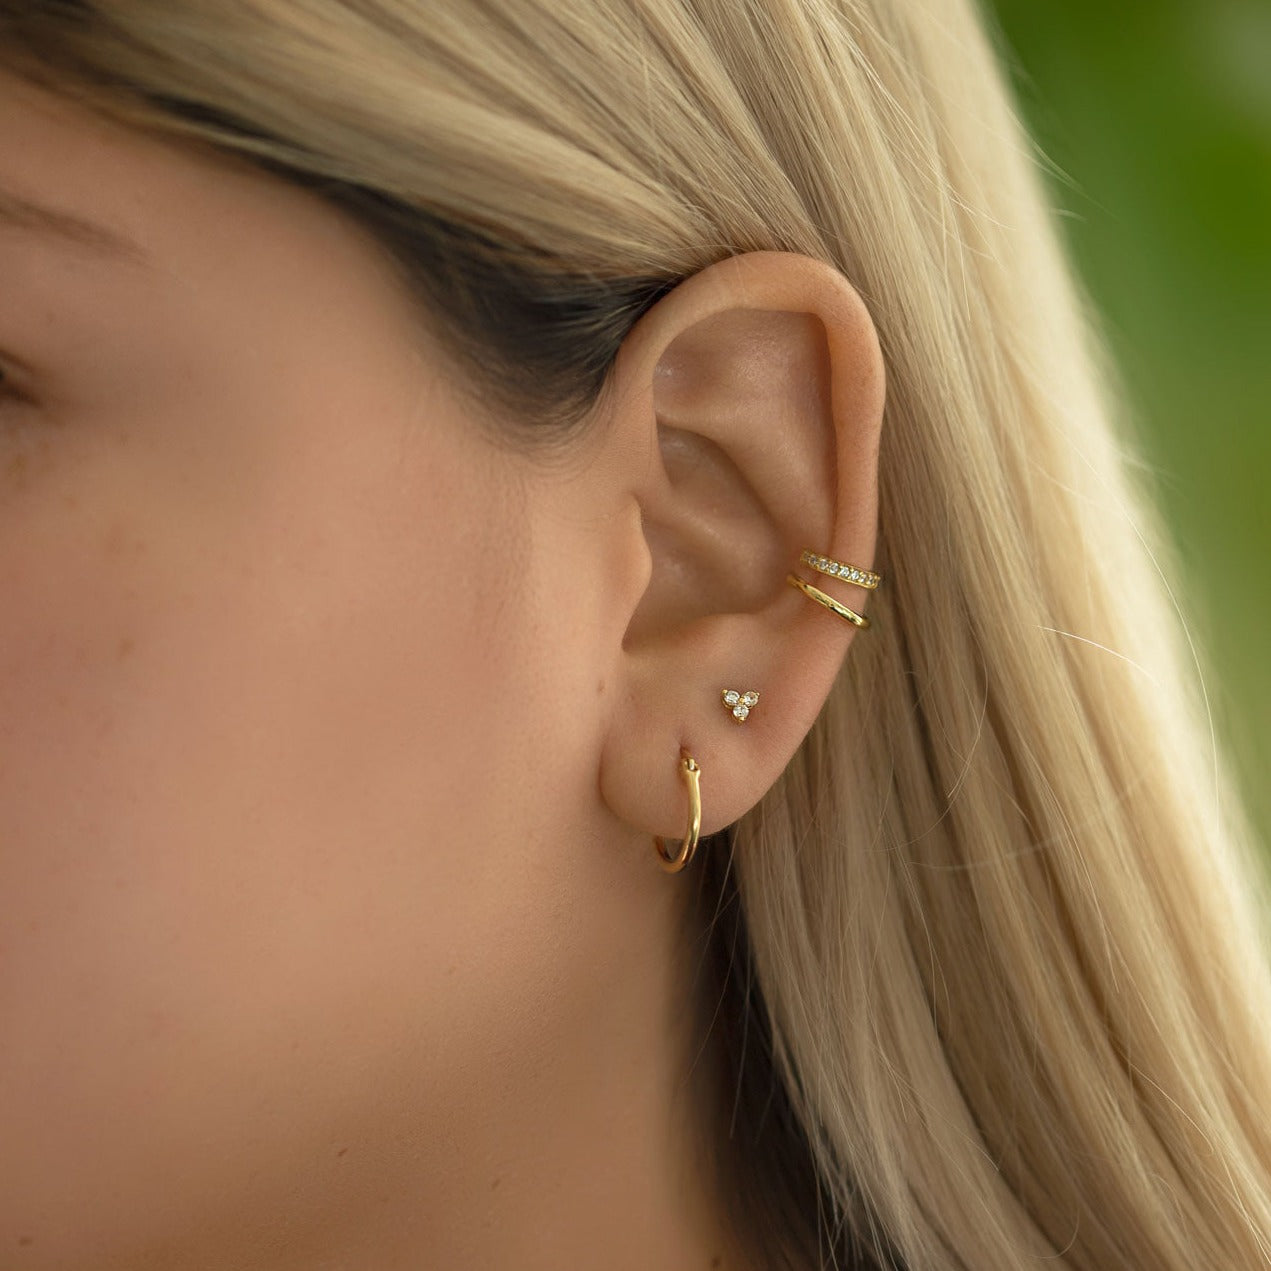 Tiny Gold Stud Earrings Set, Helix Cartilage Piercing – AMYO Jewelry